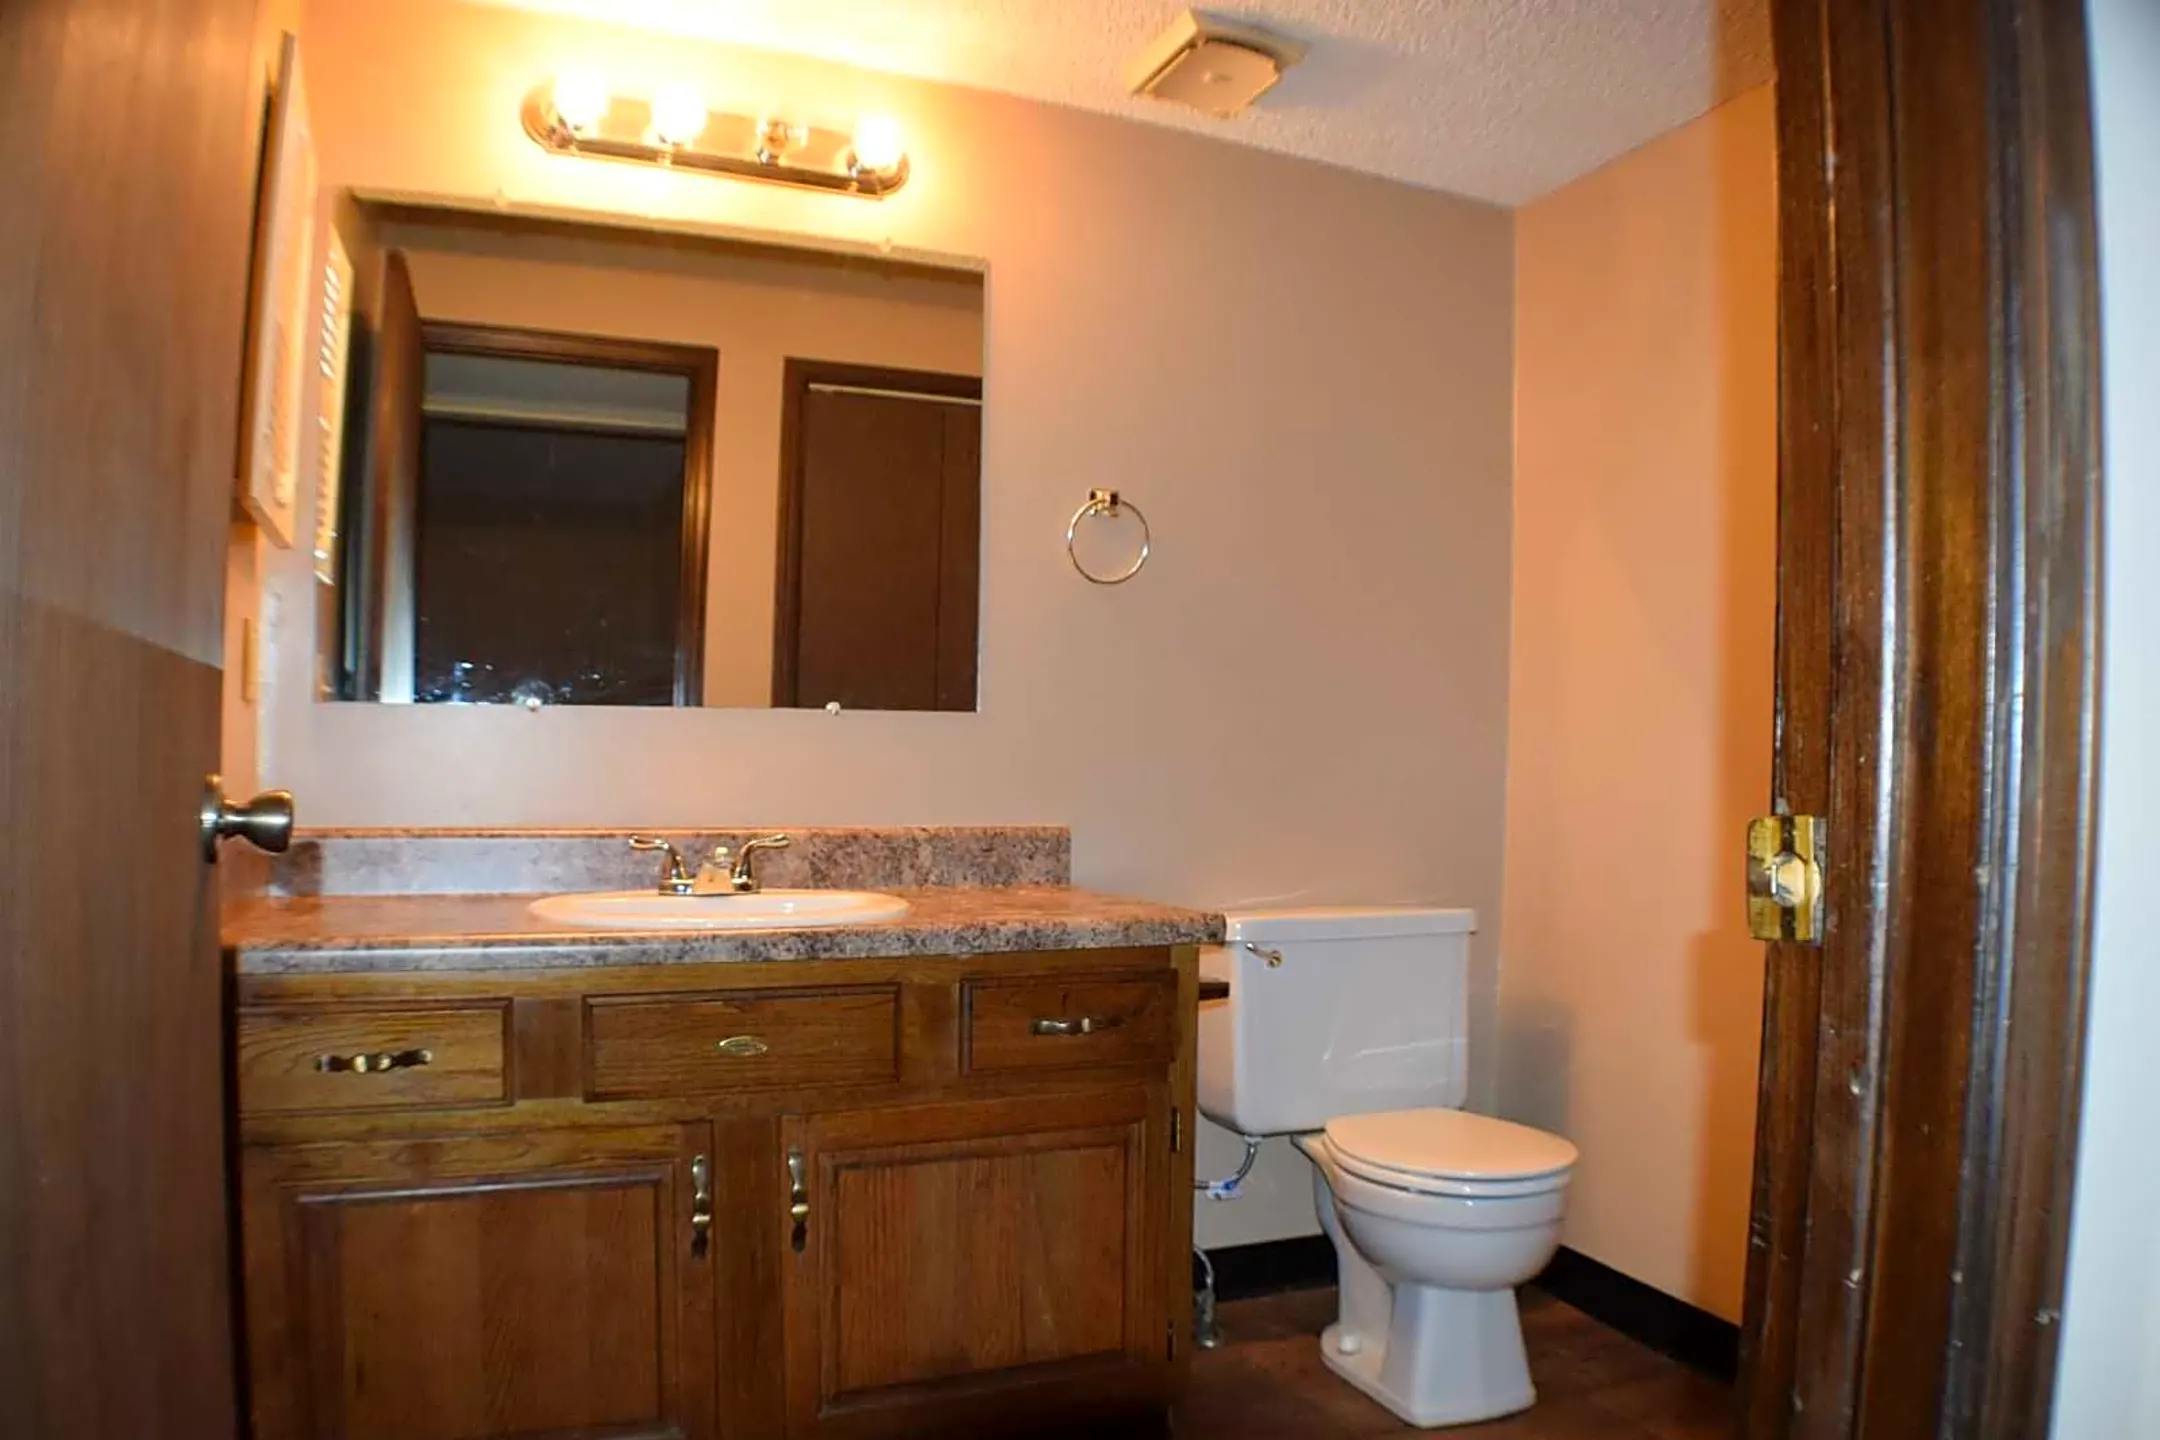 Bathroom - The Aragon Apartments - Wichita, KS